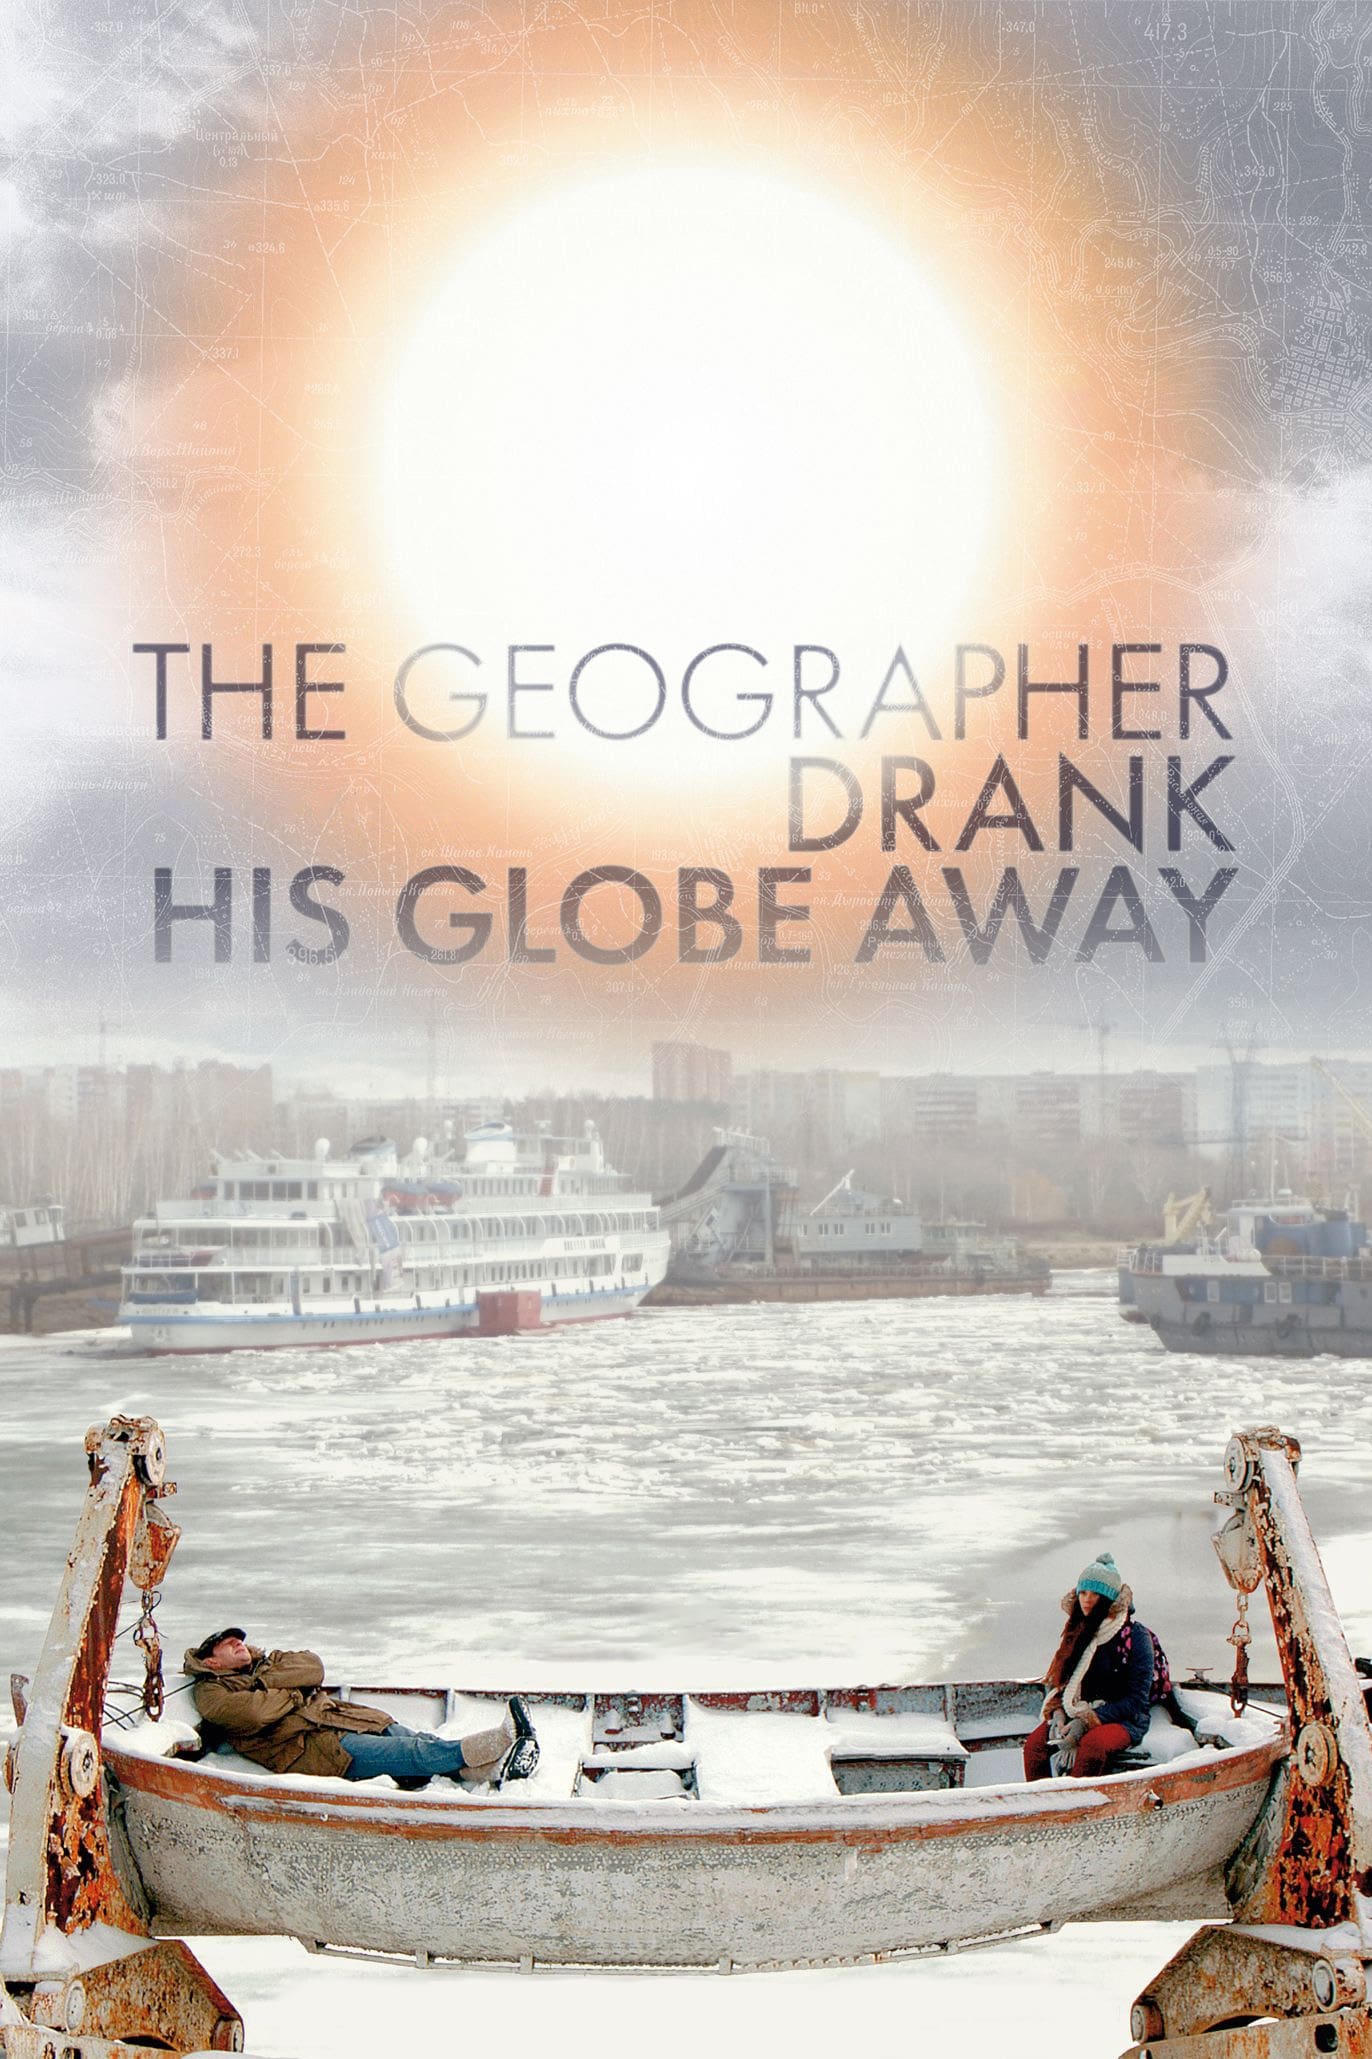 The Geographer Drank His Globe Away (2013)